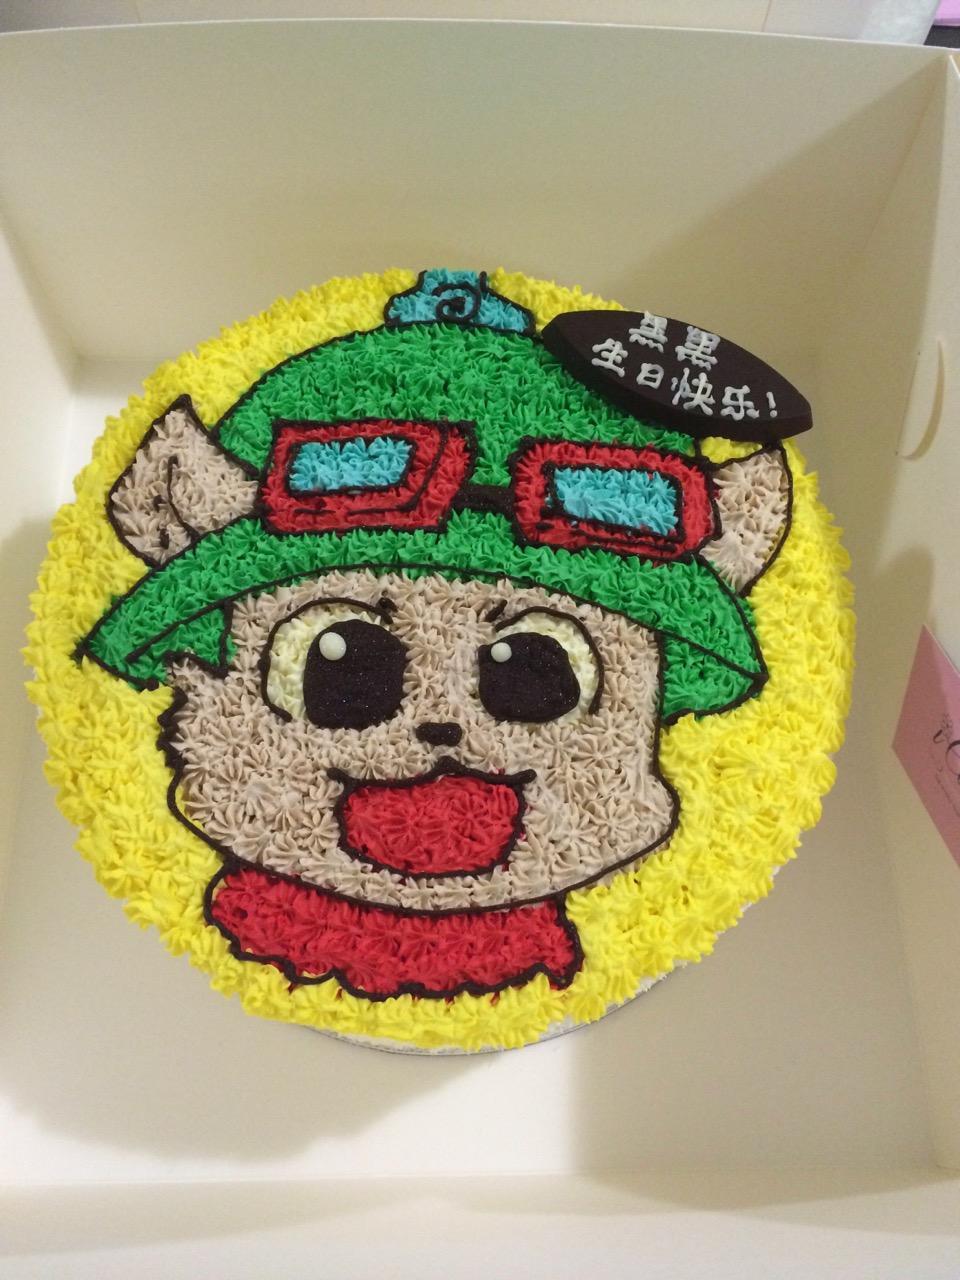 Share 67+ ninja hattori cake design latest - in.daotaonec